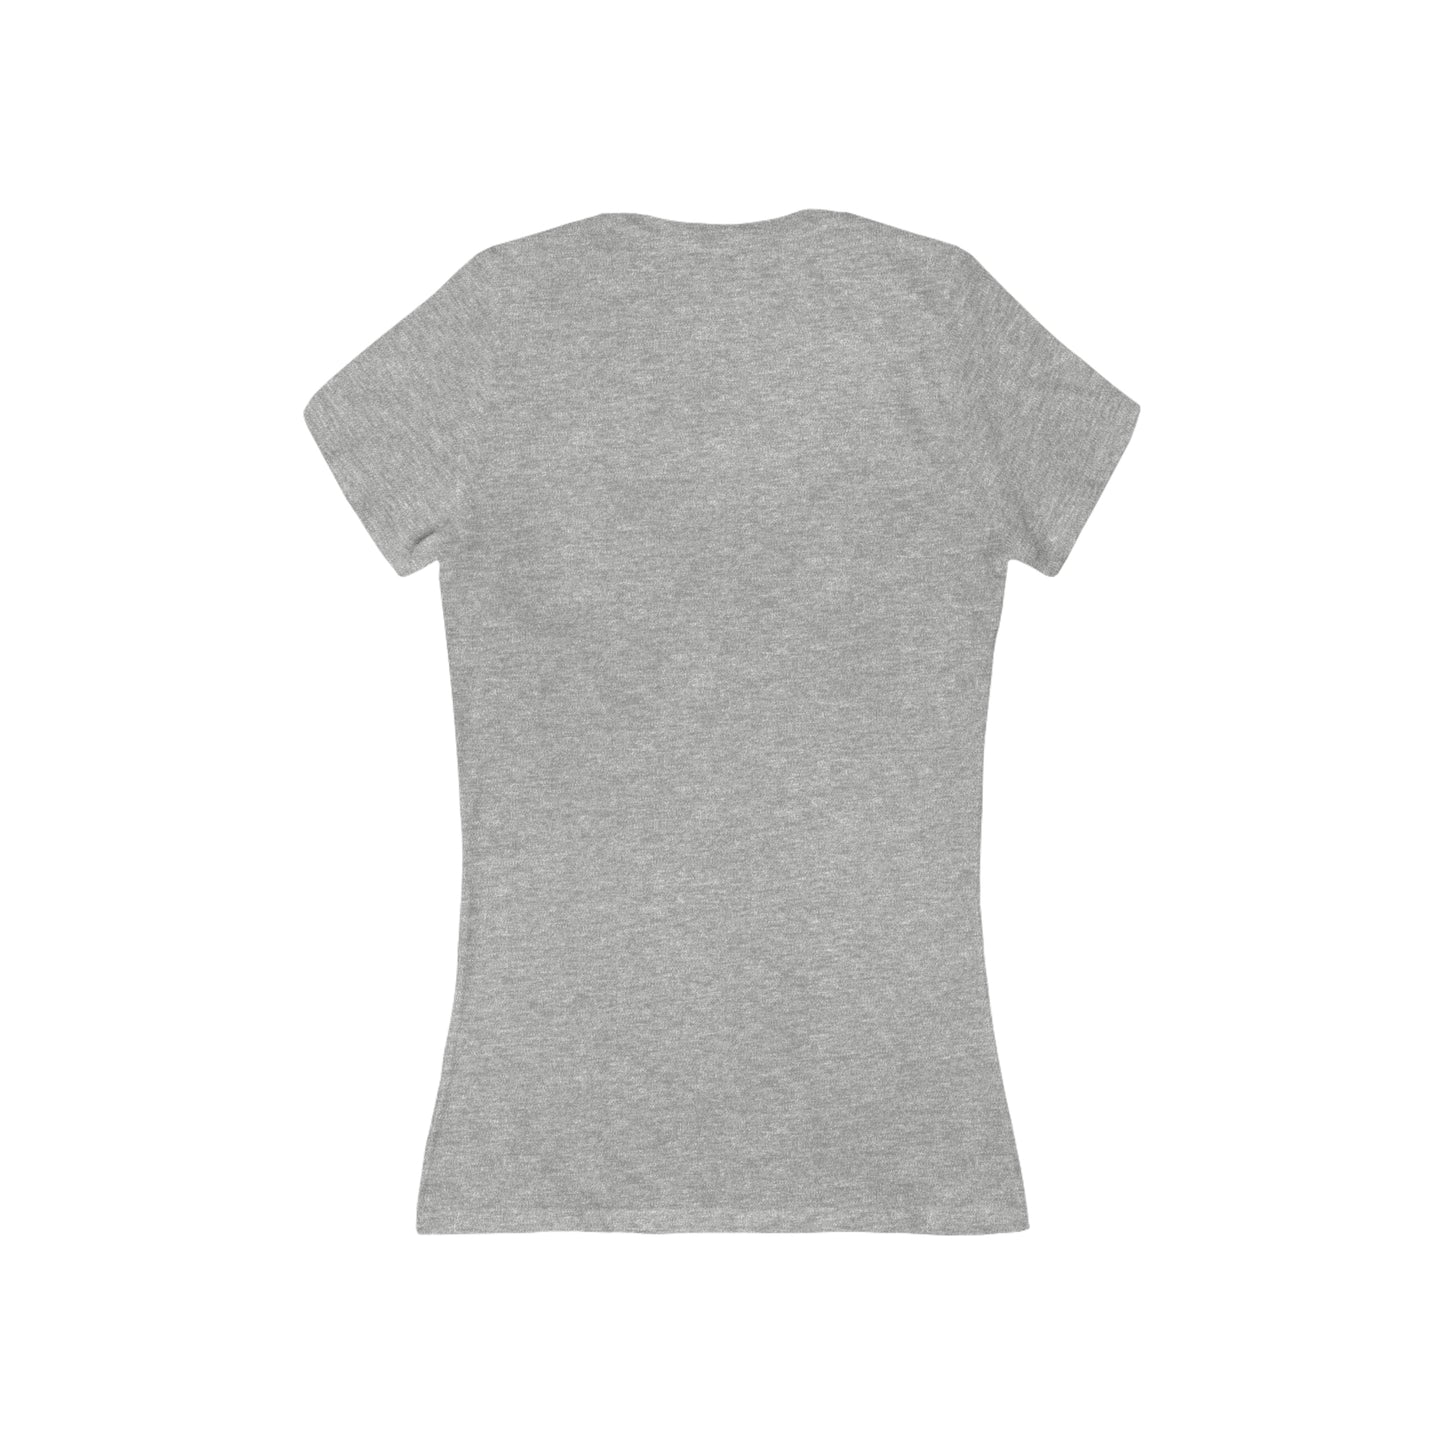 Ladies Jersey Short Sleeve Deep V-Neck T- Shirt - Black Logo - Journey to Memphis